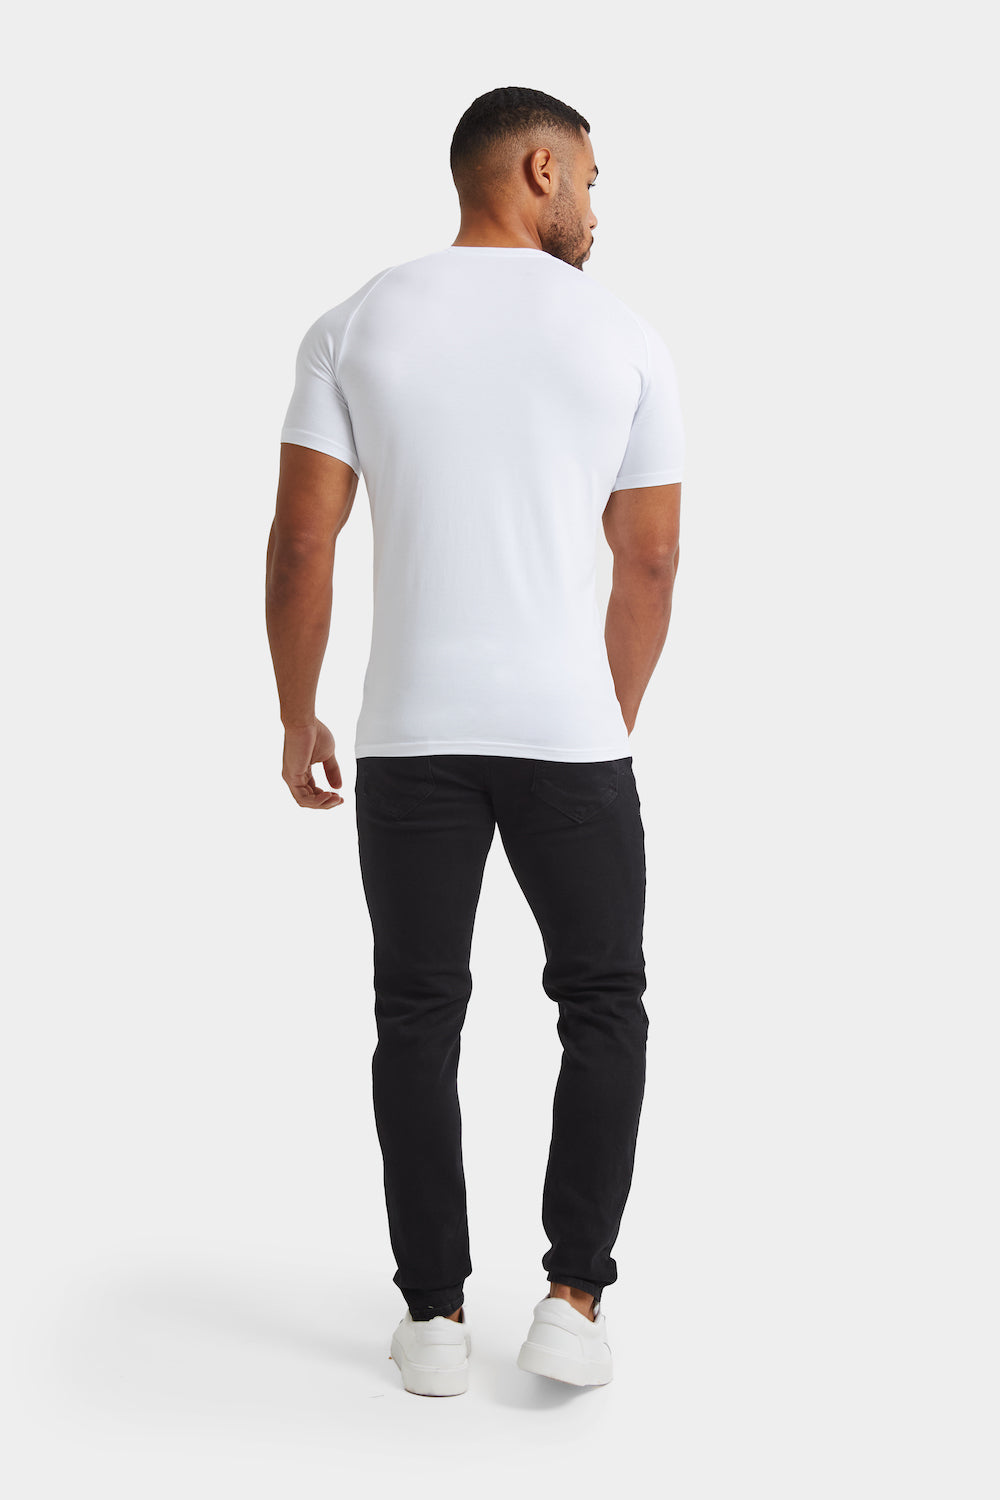 Athflex Hustle High Neck Compression T-shirt in White